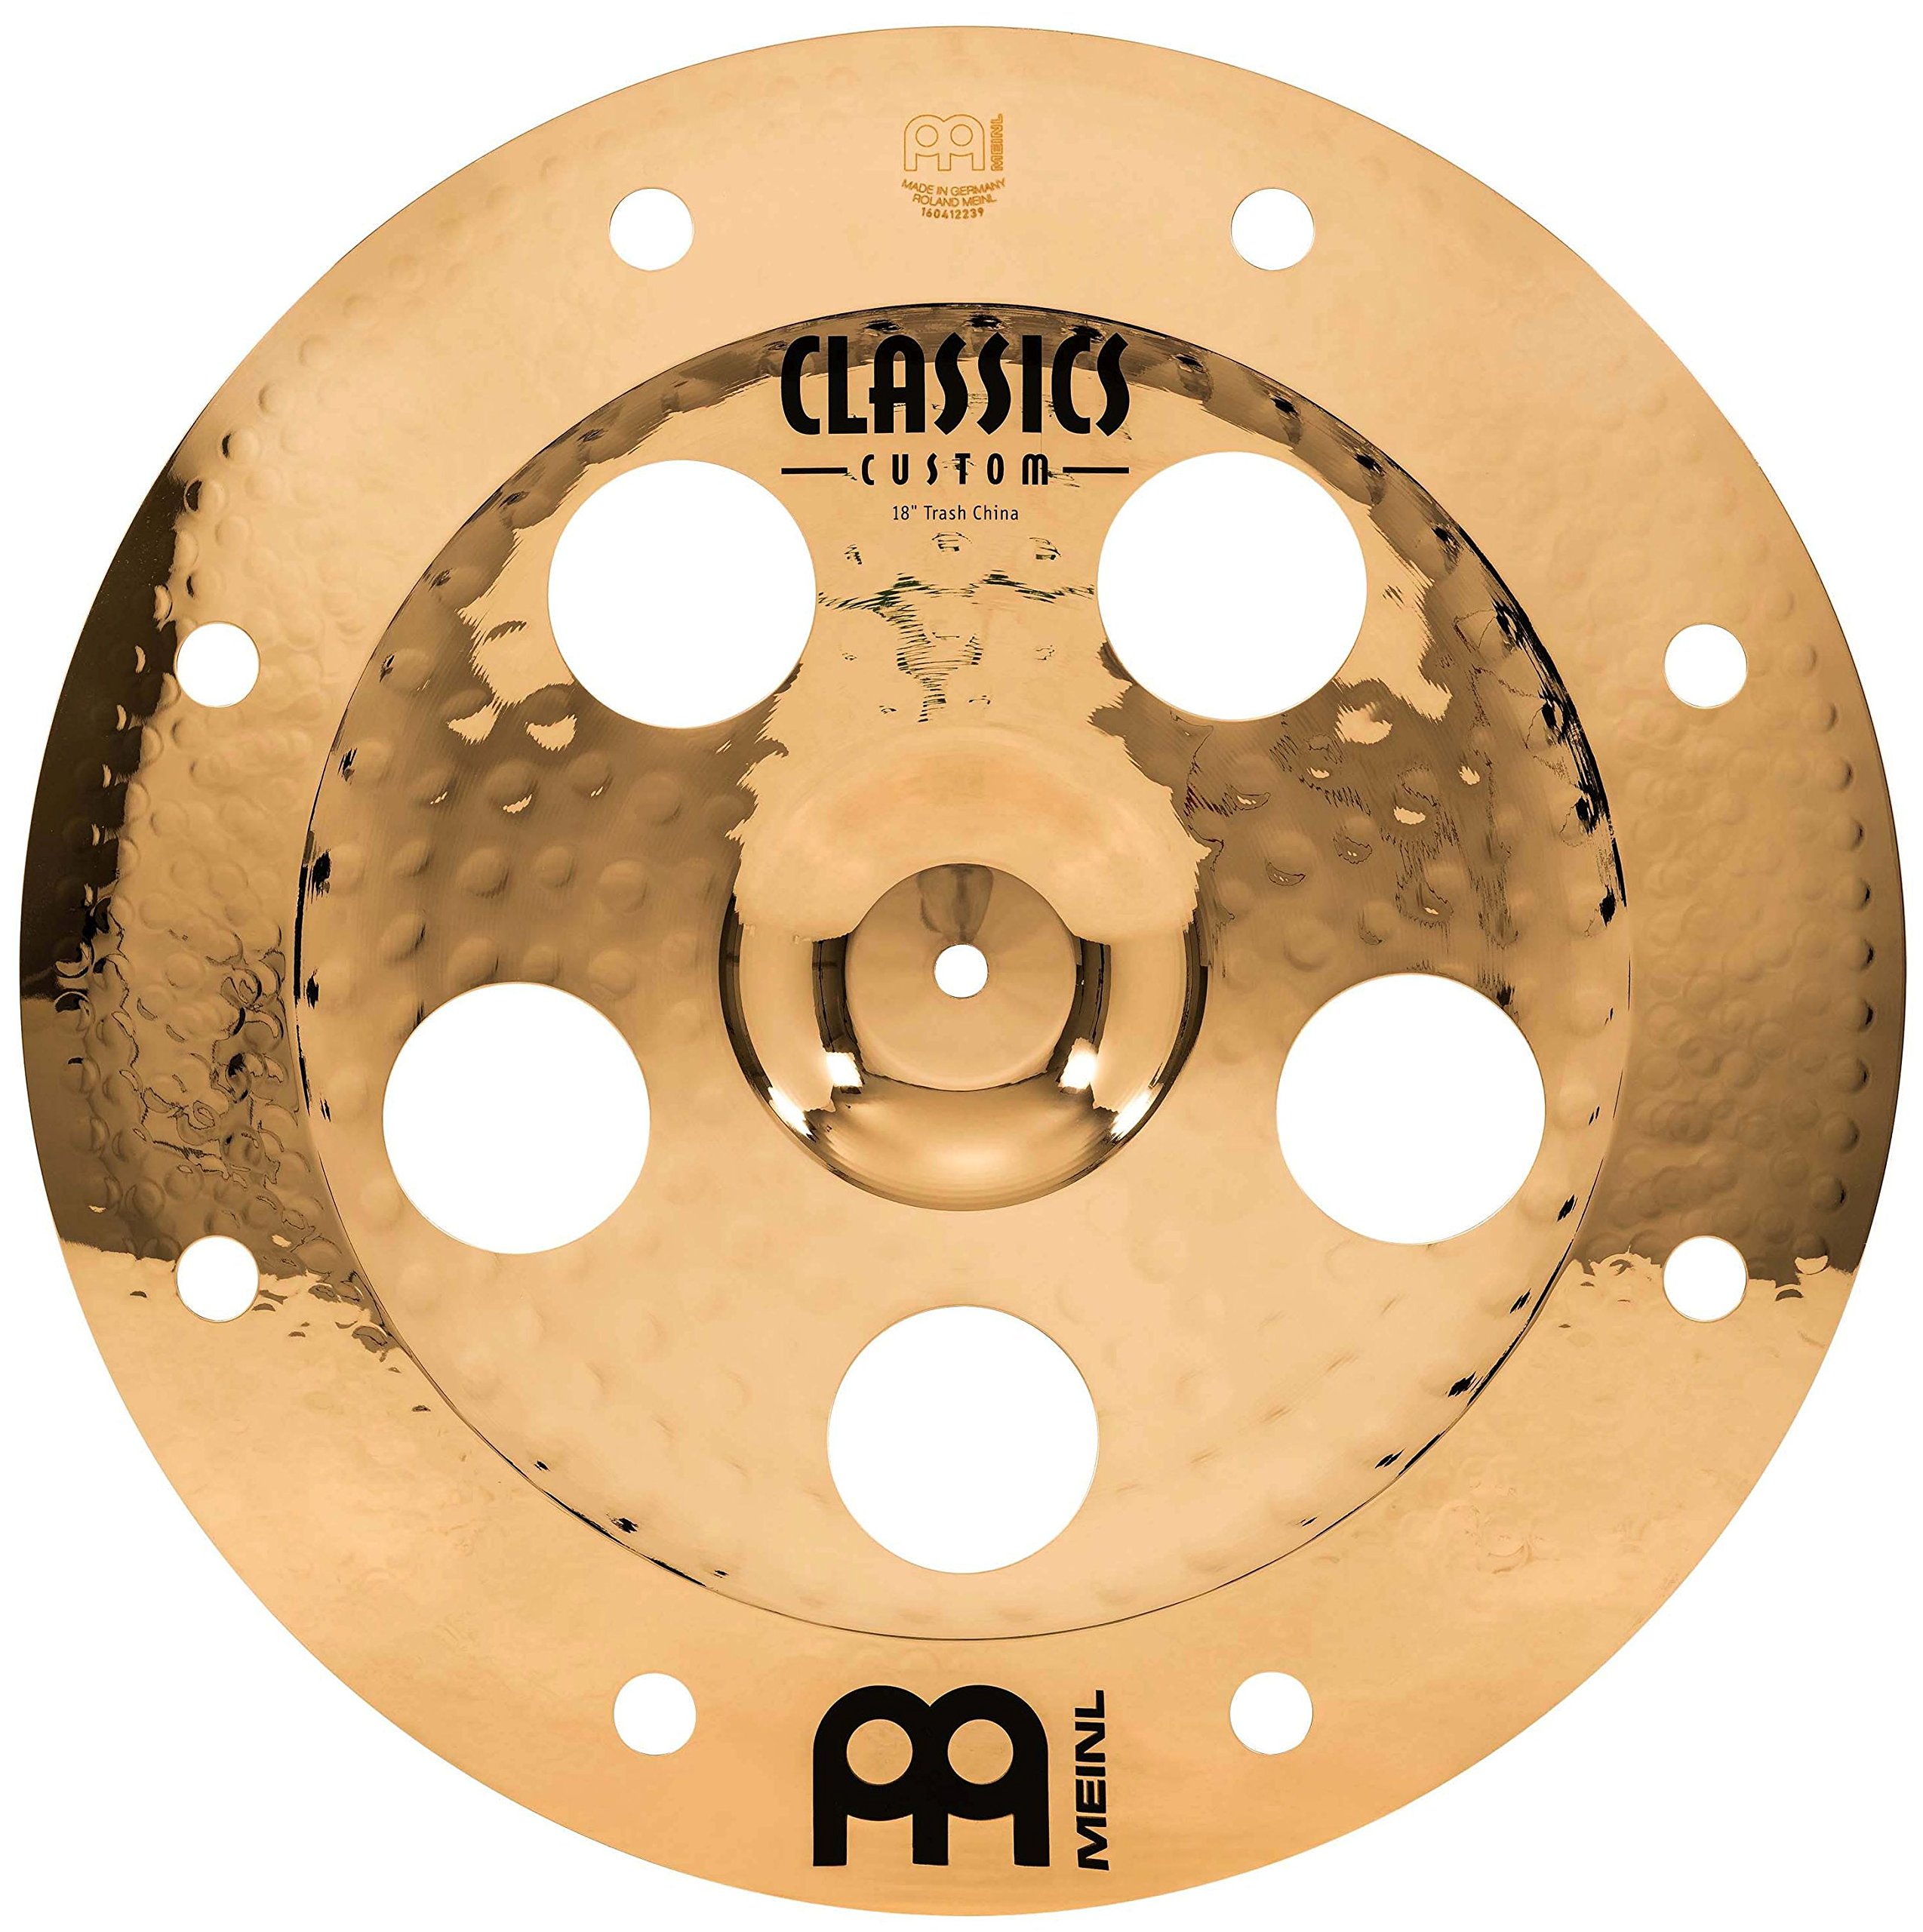 Meinl Cymbals Classics Custom Brilliant Trash China — 18 Zoll (Video) Schlagzeug Becken (45,72cm) B12 Bronze, Brilliantes Finish (CC18TRCH-B)